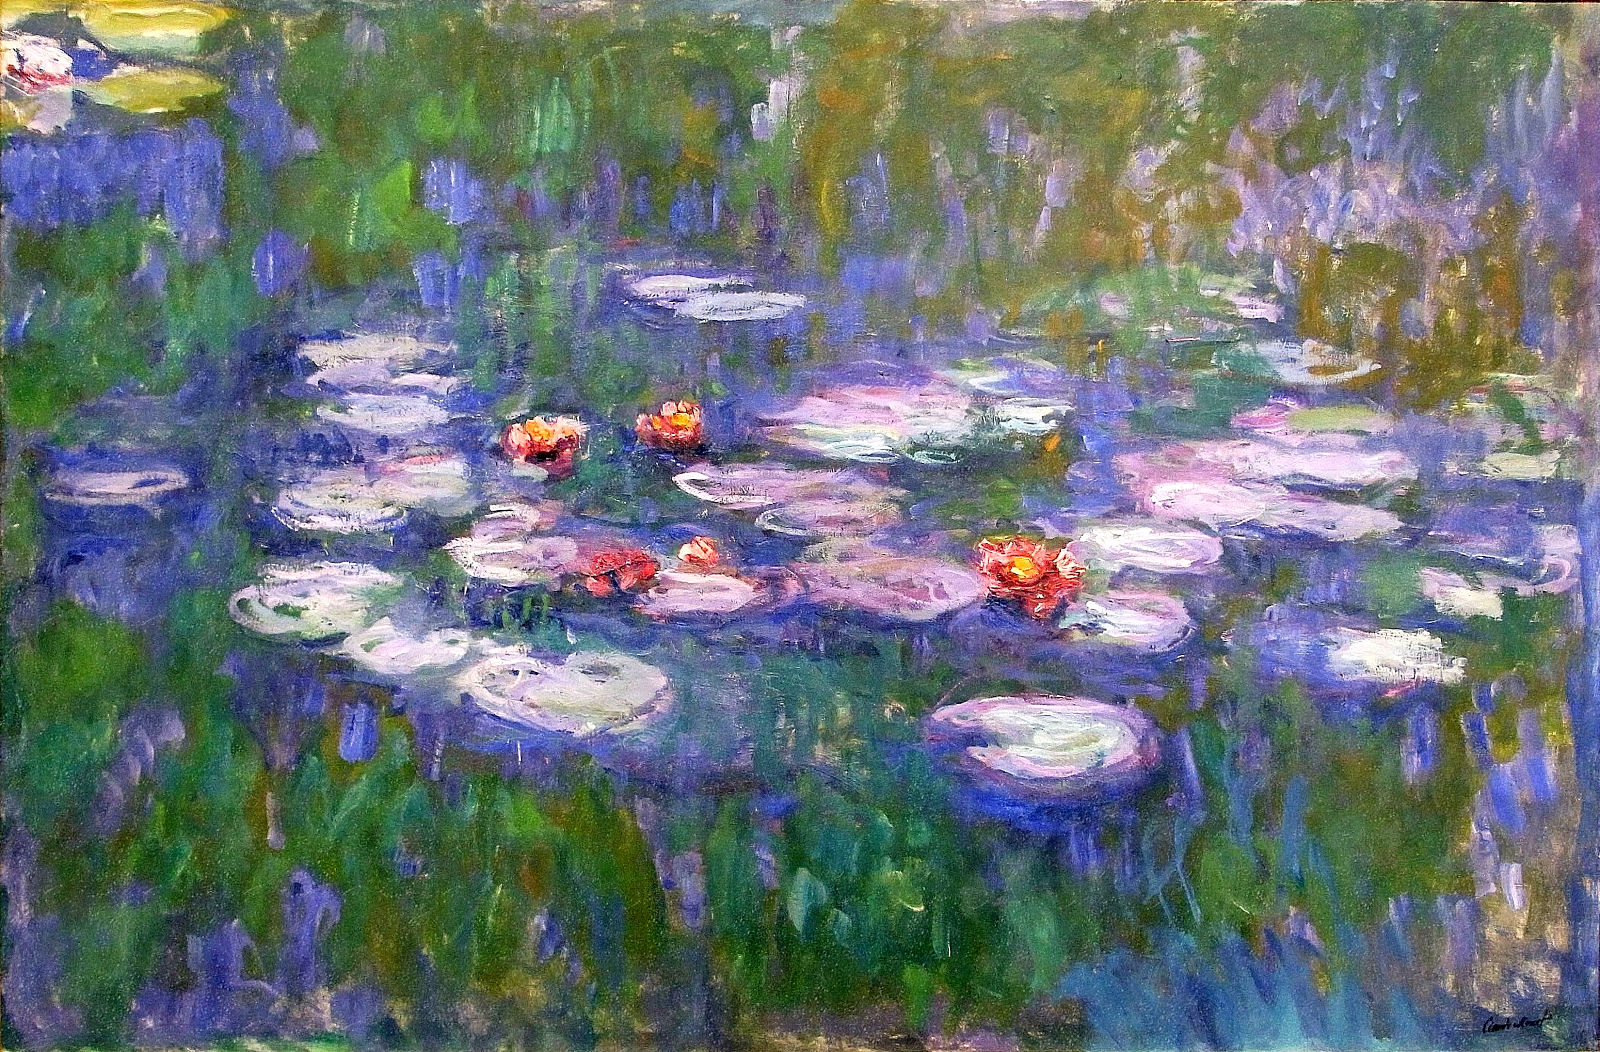 Claude+Monet-1840-1926 (837).jpg